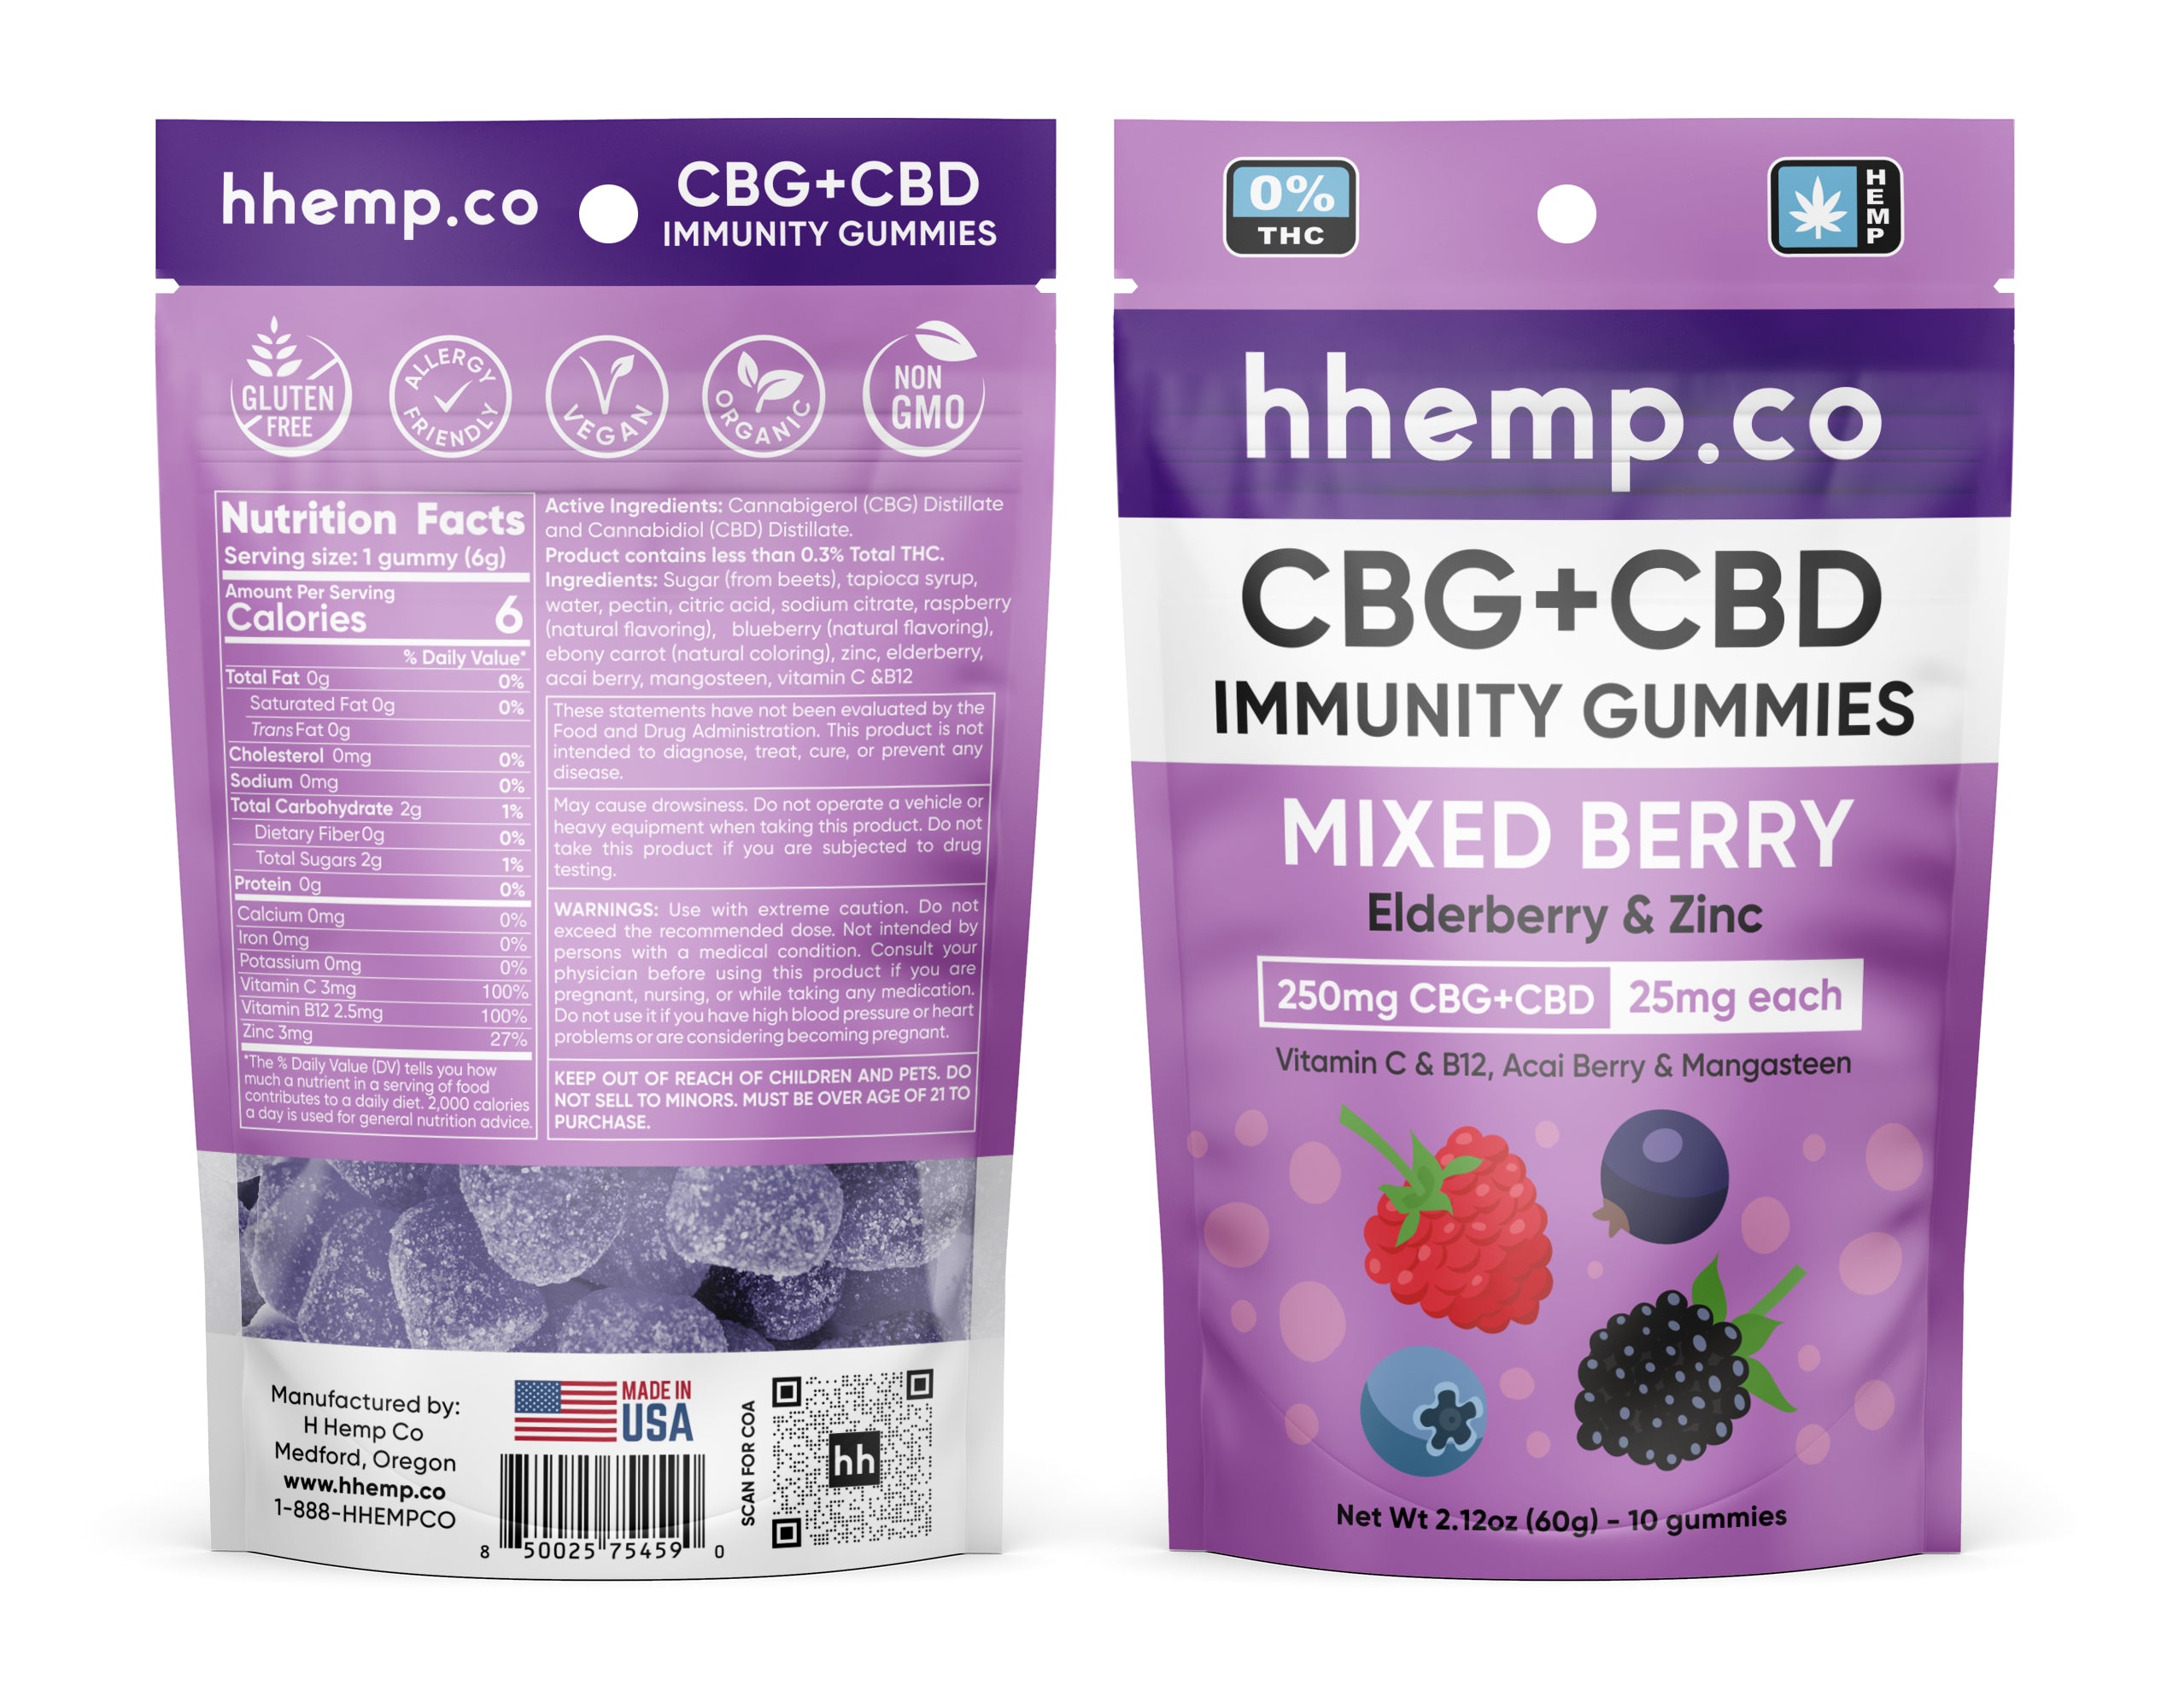 hhemp.co CBG + CBD Immunity Gummies - Mixed Berry (25mg)